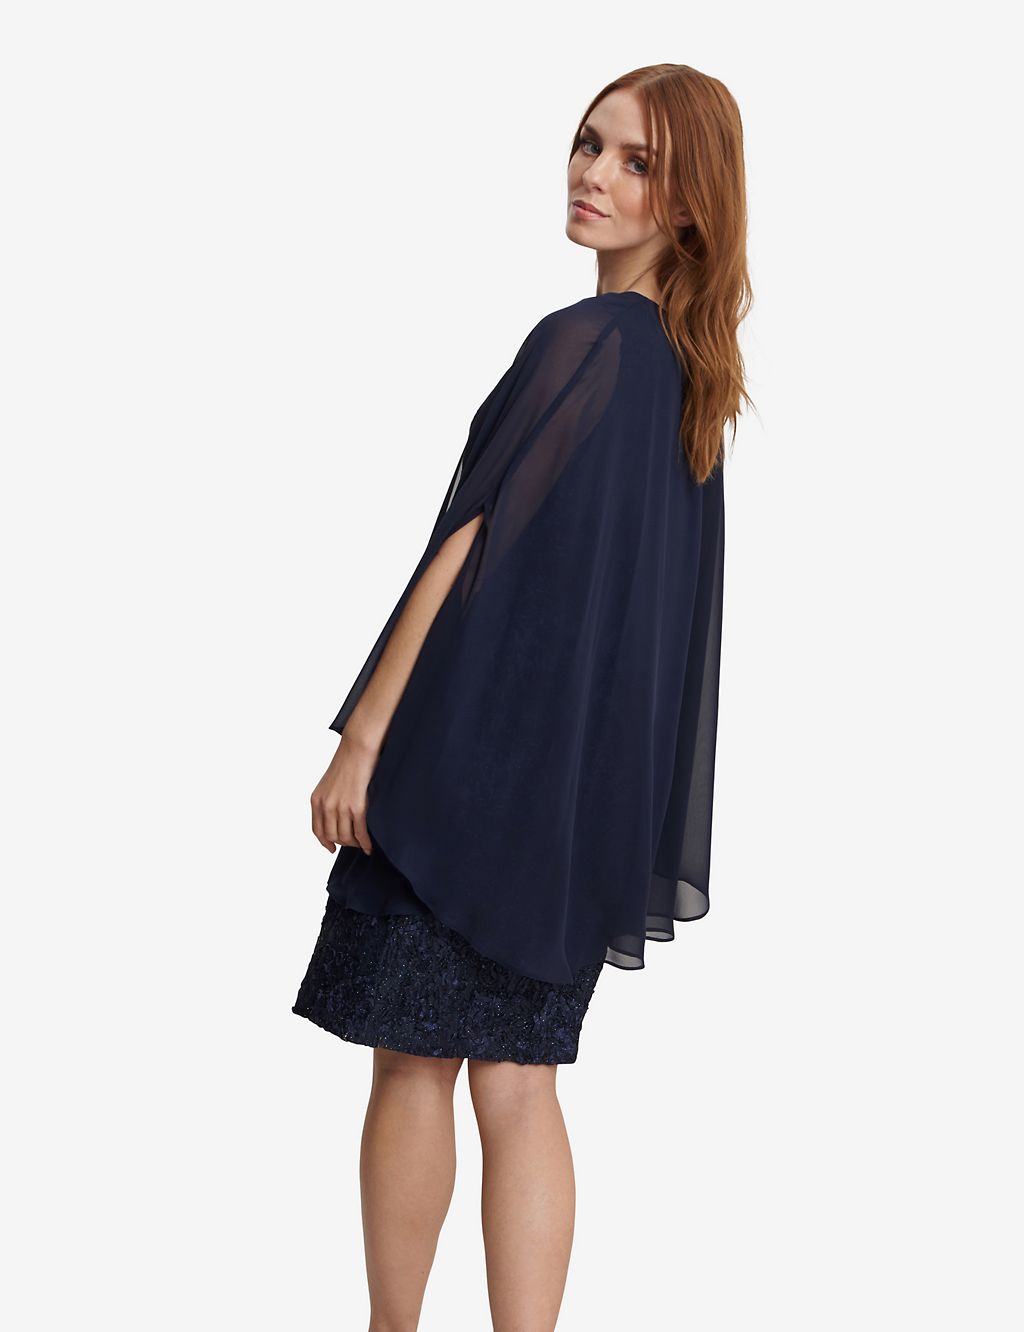 Lace Knee Length Shift Dress with Jacket | Gina Bacconi | M&S